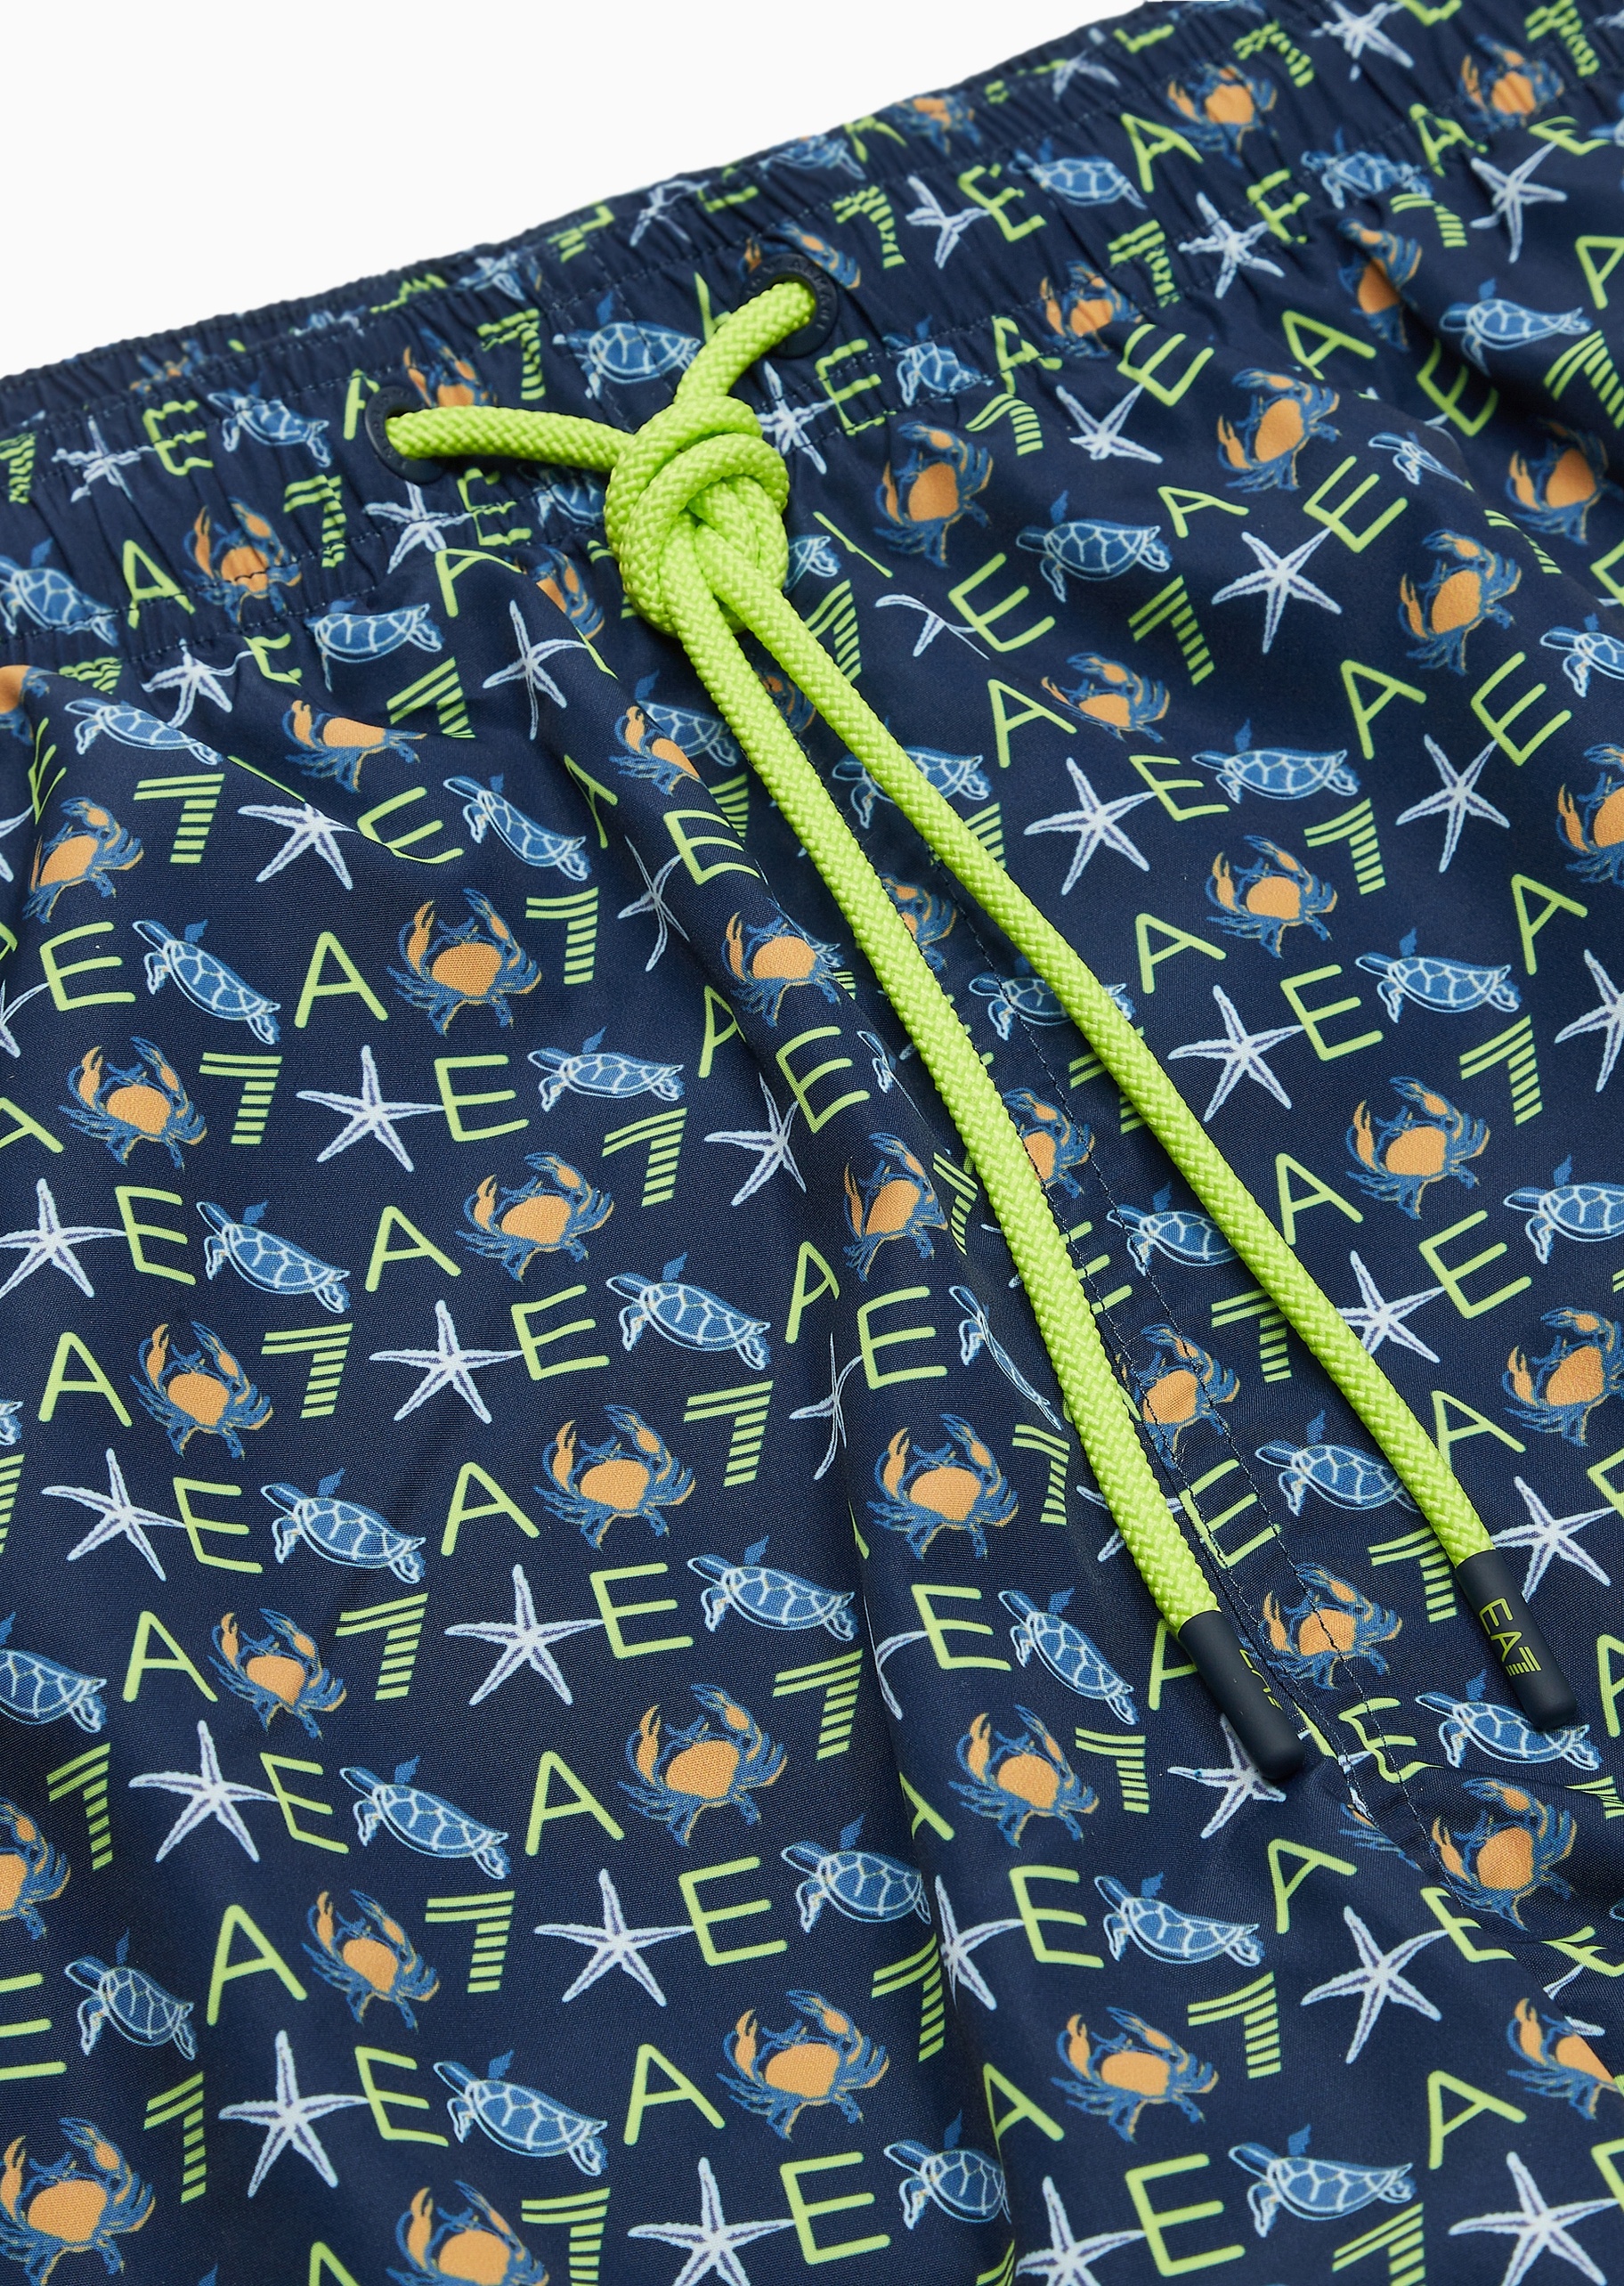 EA7 男士合身系带腰短款通体印花游泳沙滩裤